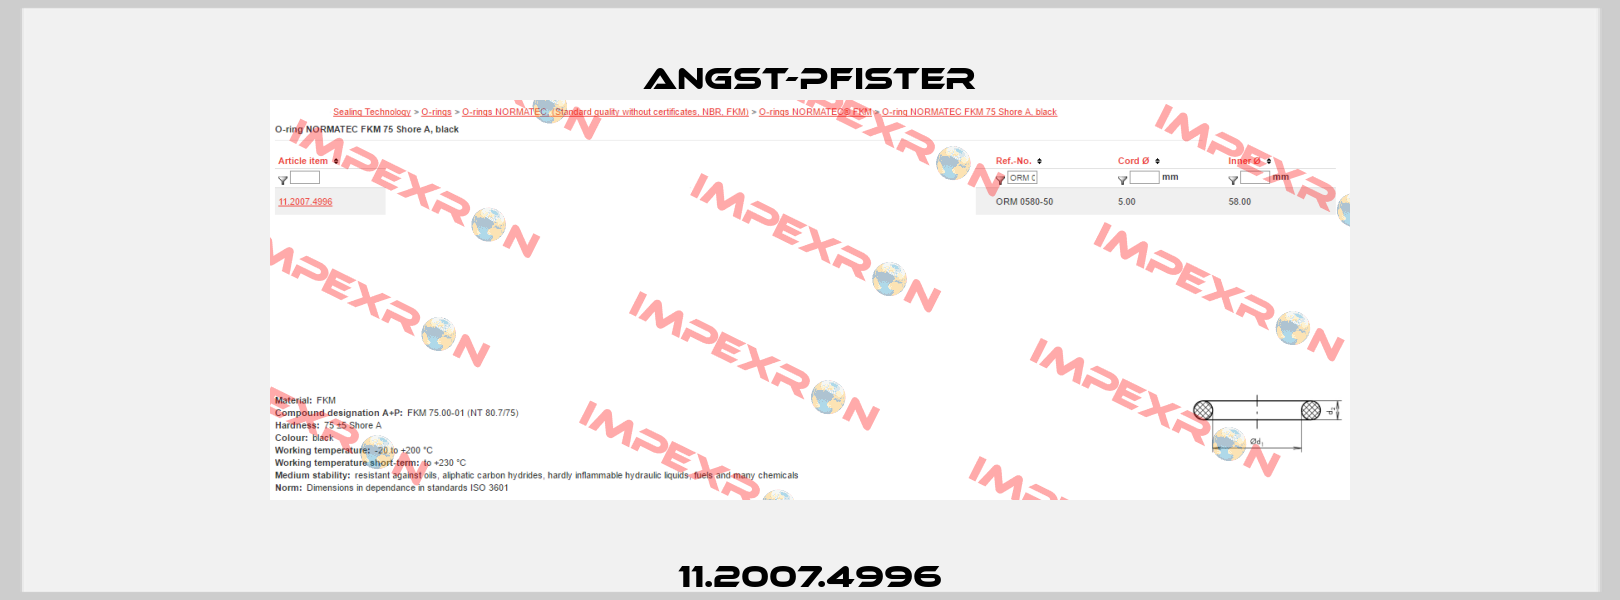 11.2007.4996 Angst-Pfister